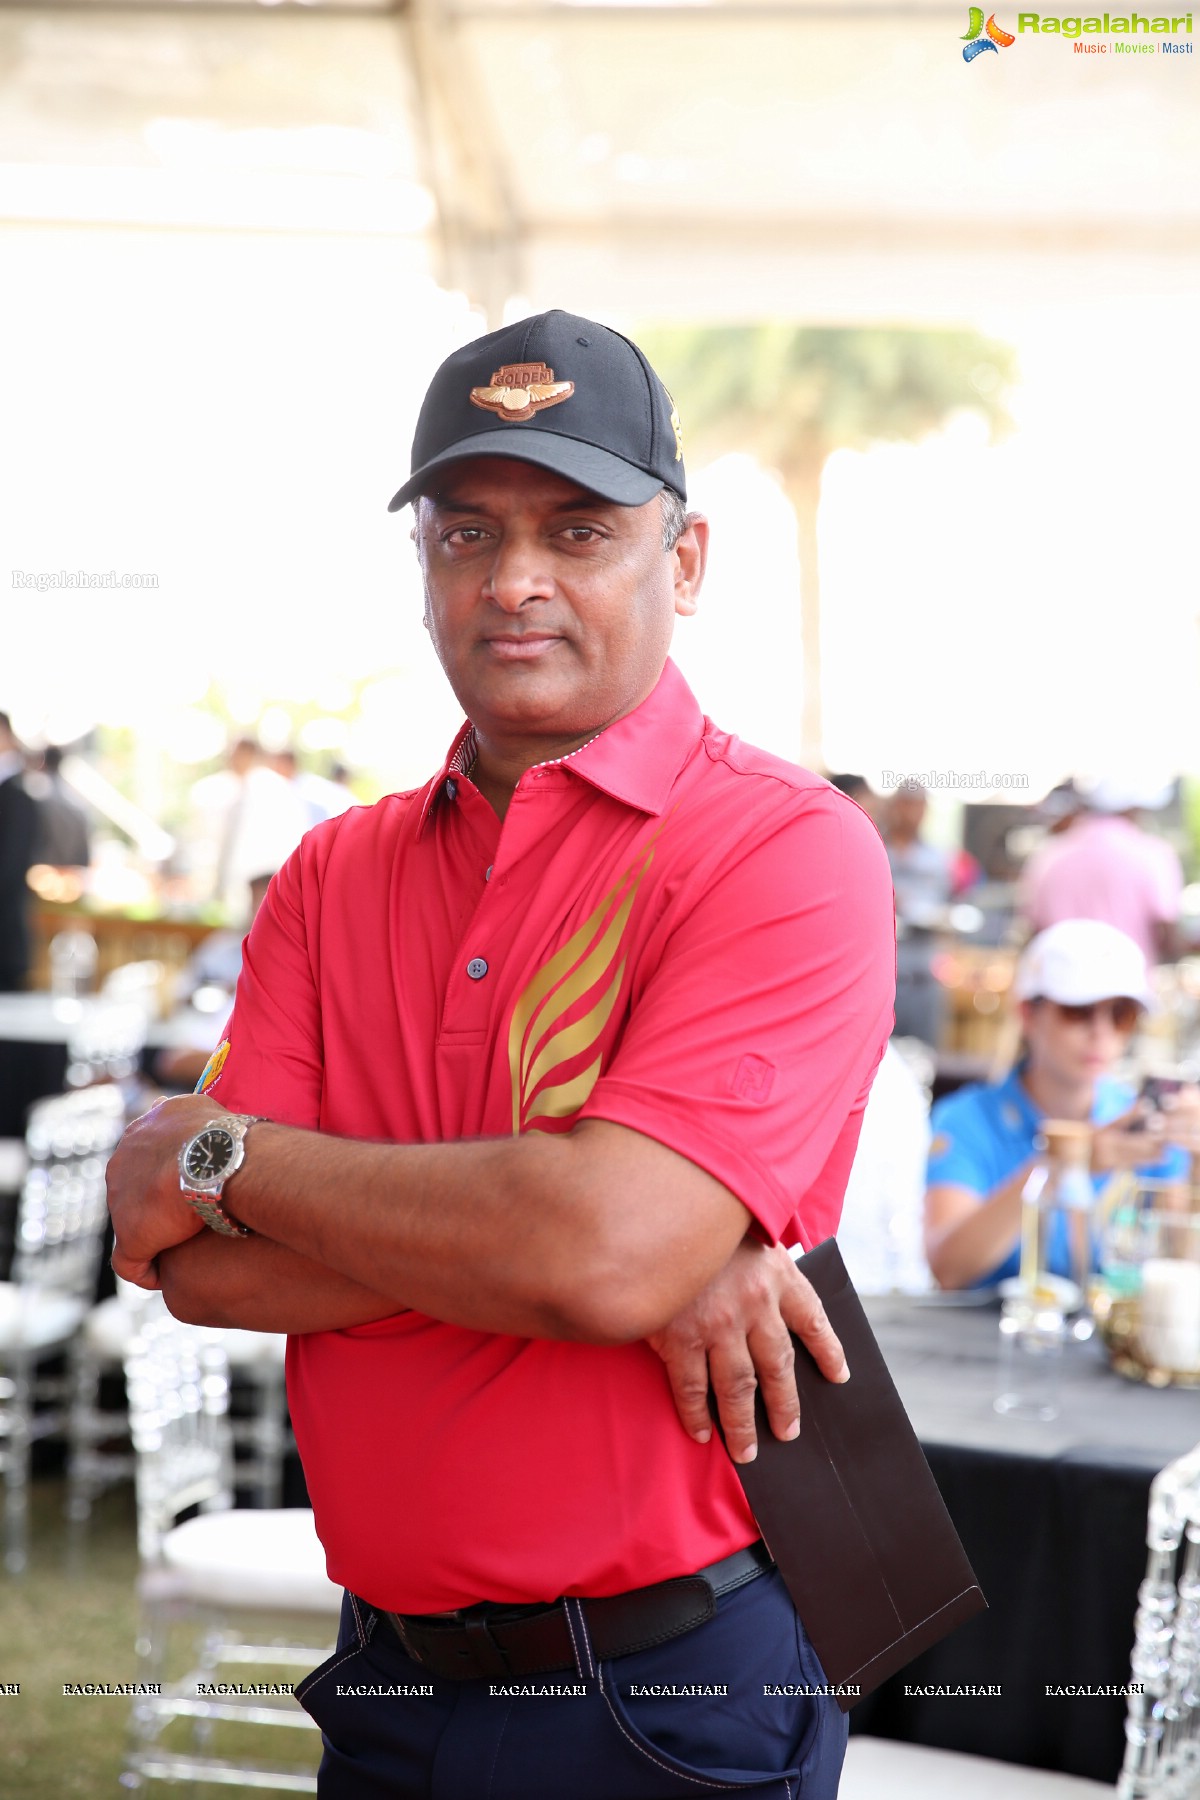 Krishnapatnam Port Hosts 4th edition of Golden Eagles Golf Championship in Hyderabad